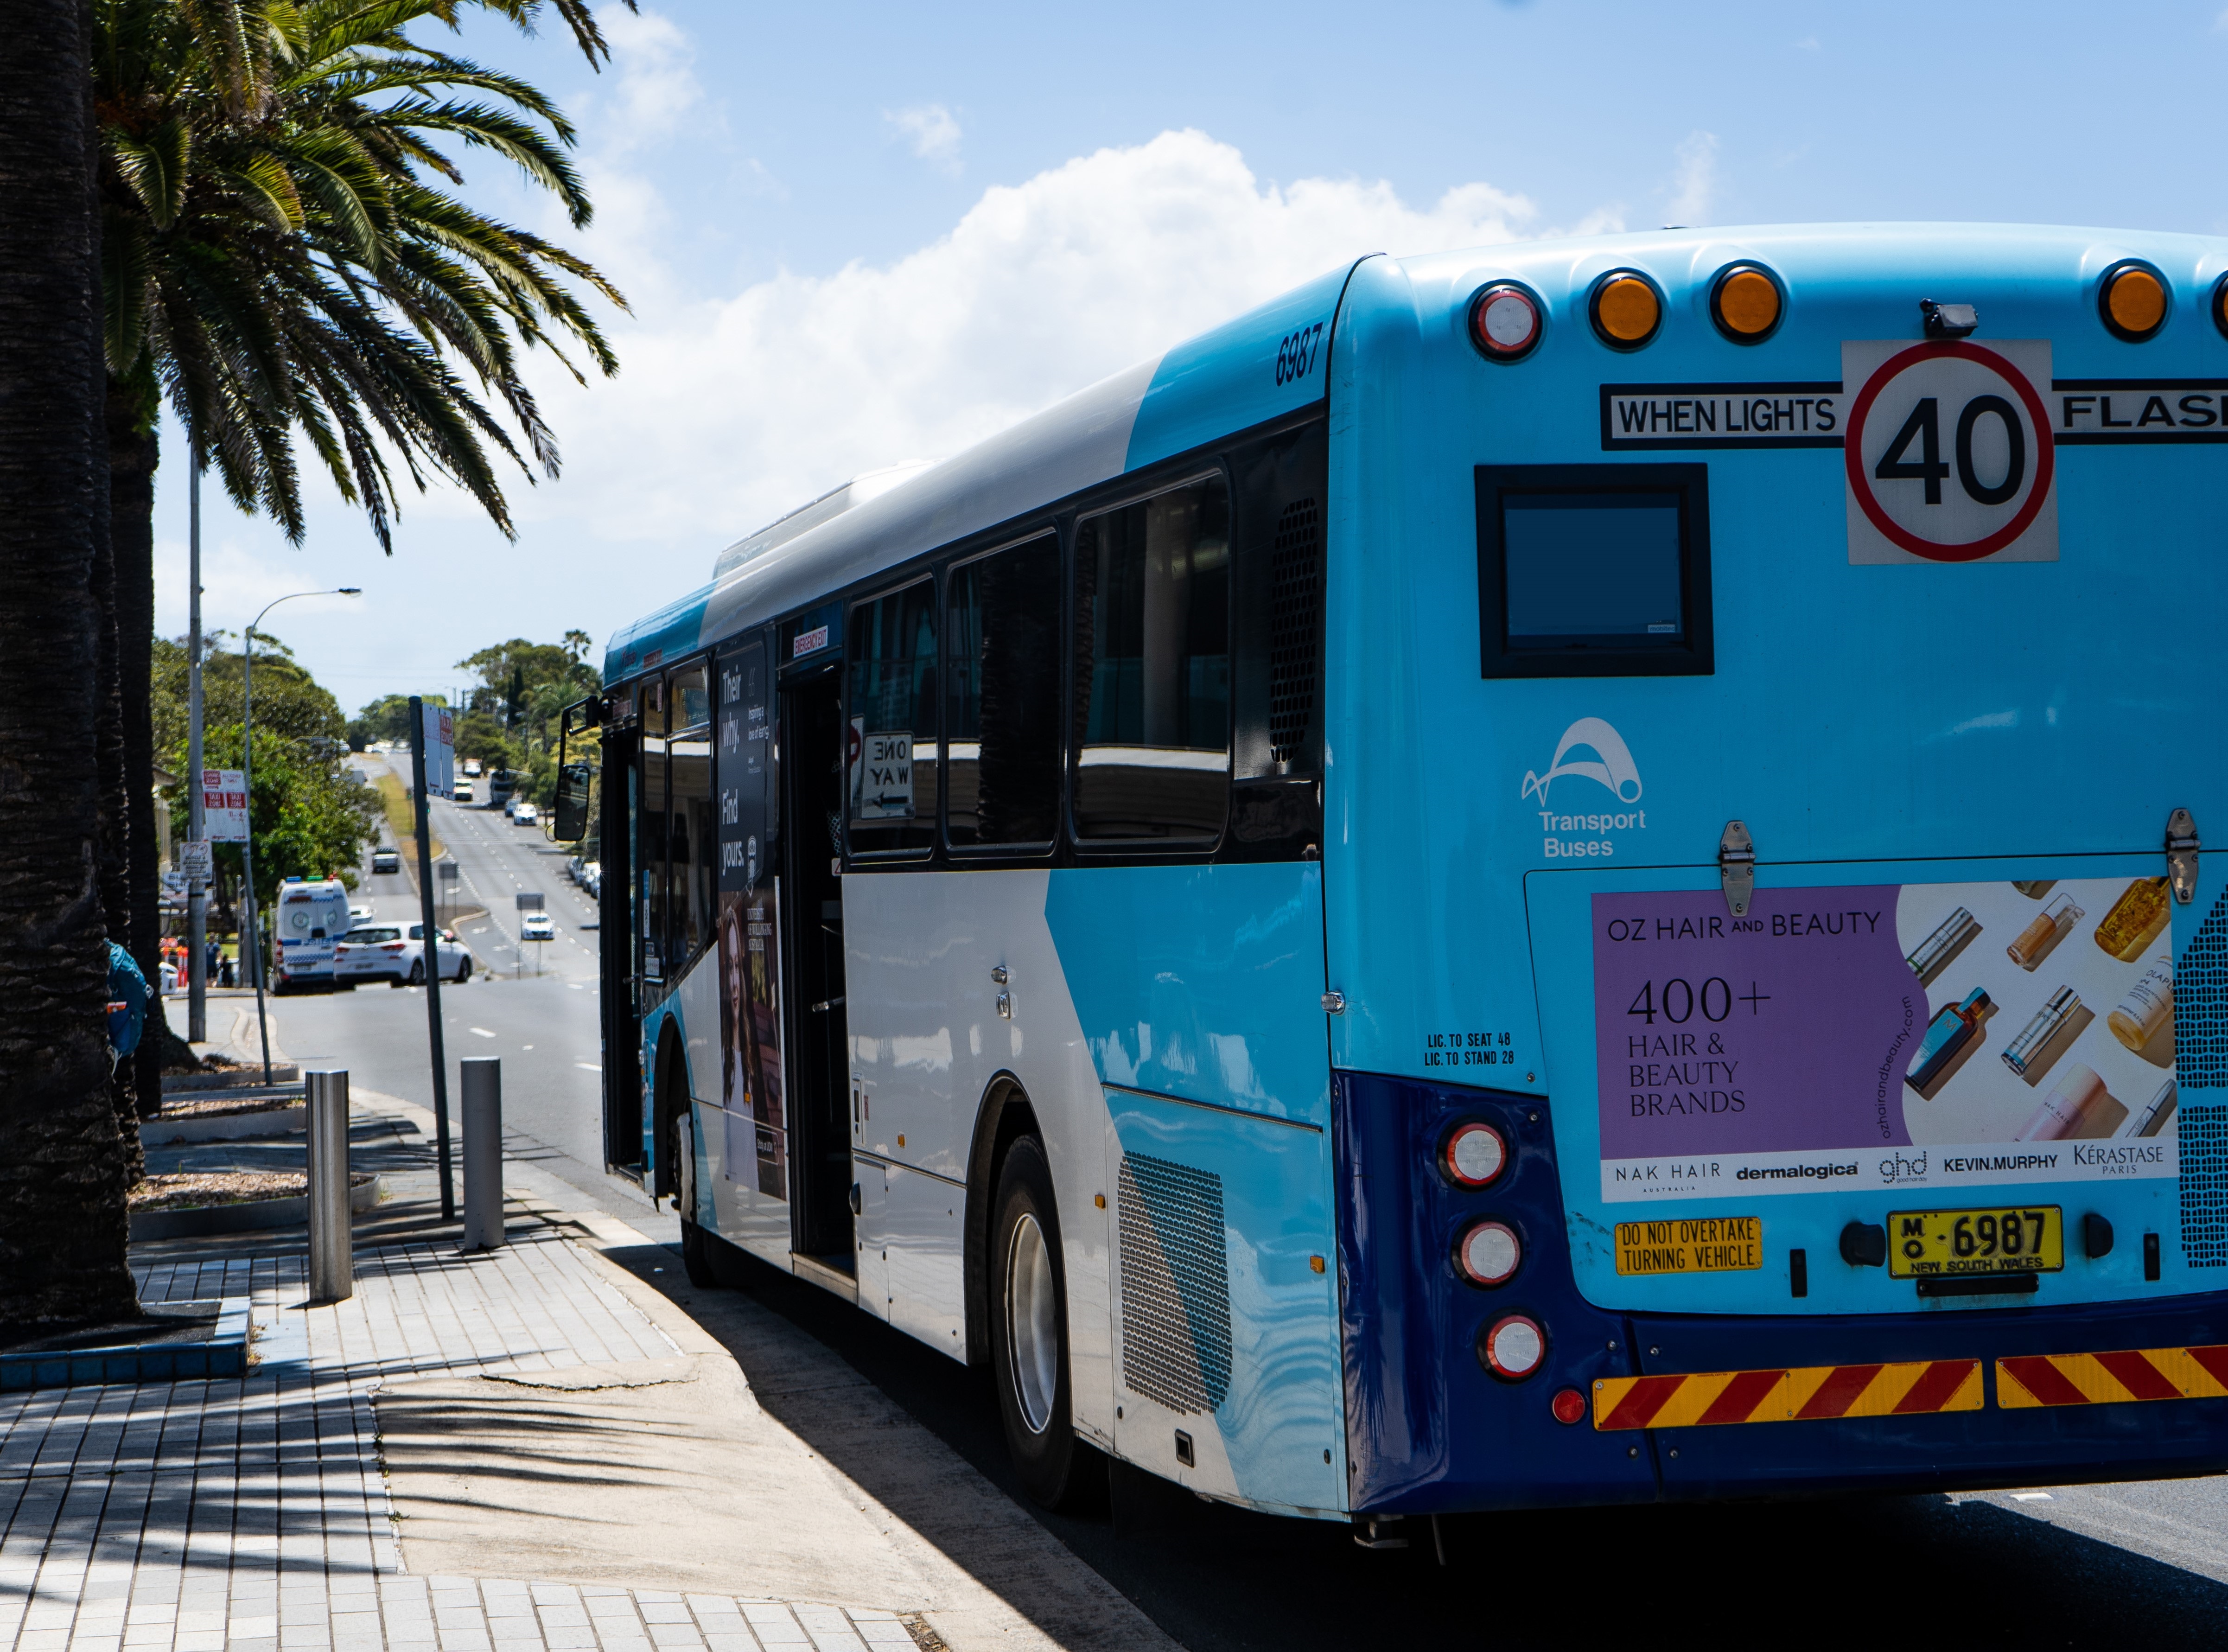 Sydney bus zero-emission transport passenger experience